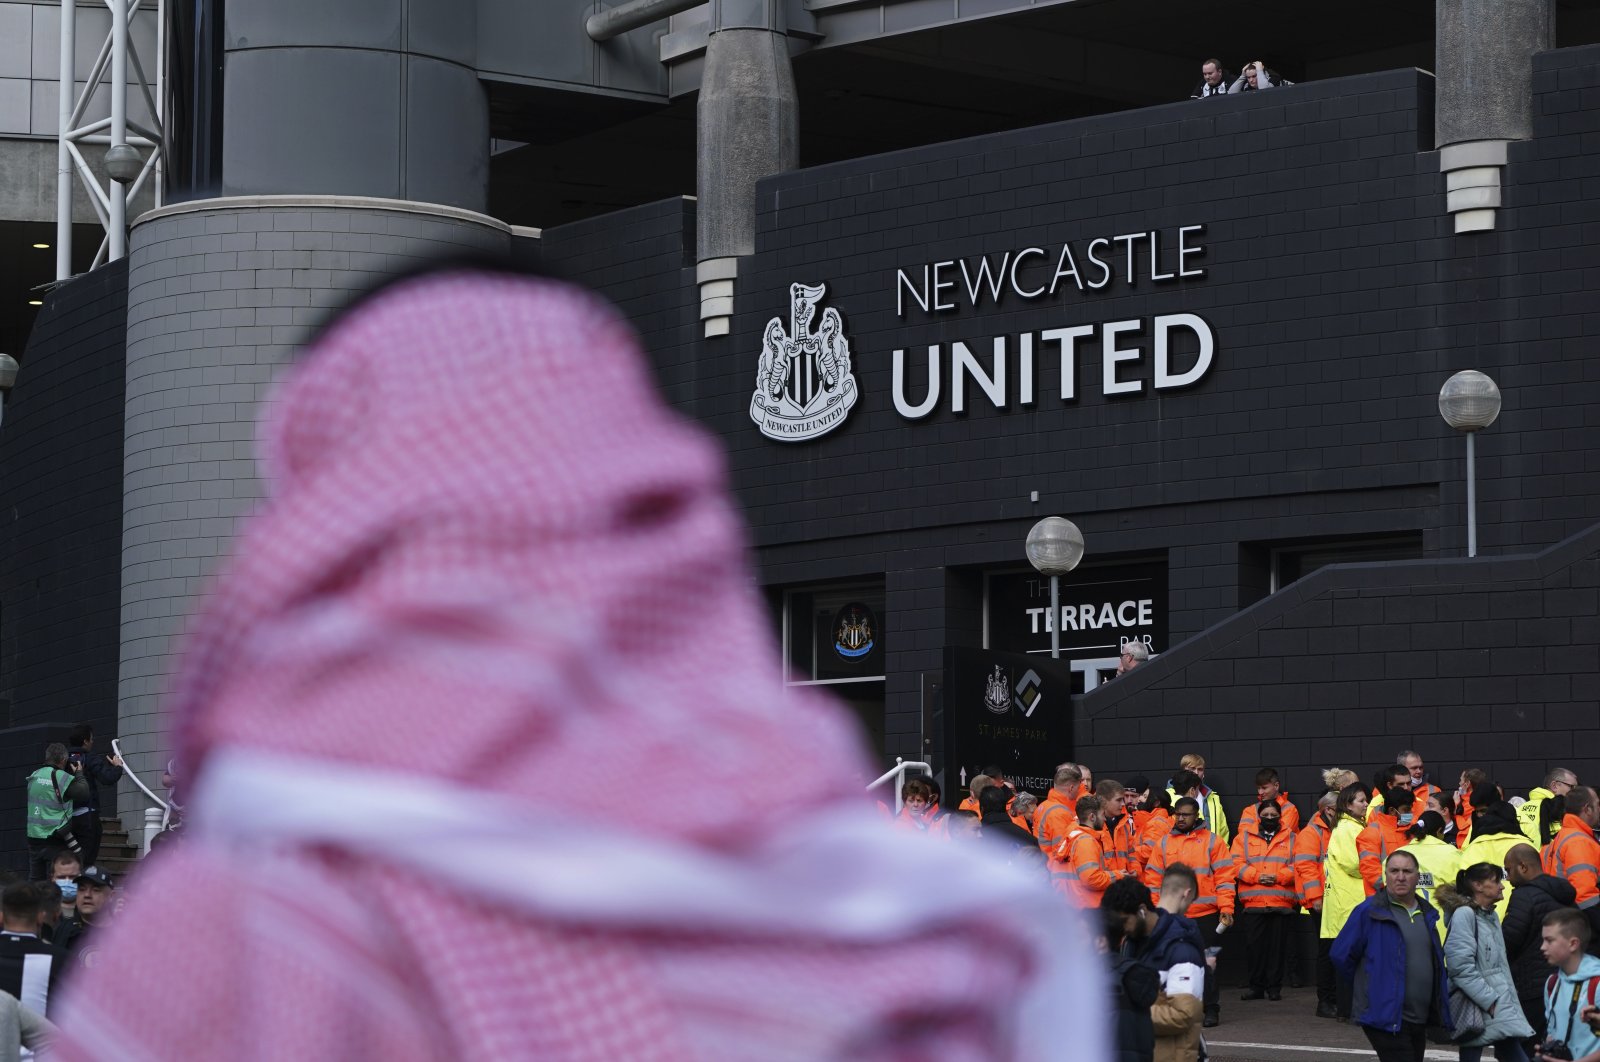 A man wearing a Saudi Arabian headdress passes the St. James' Park in Newcastle, England, Oct. 17, 2021. (AP Photo)